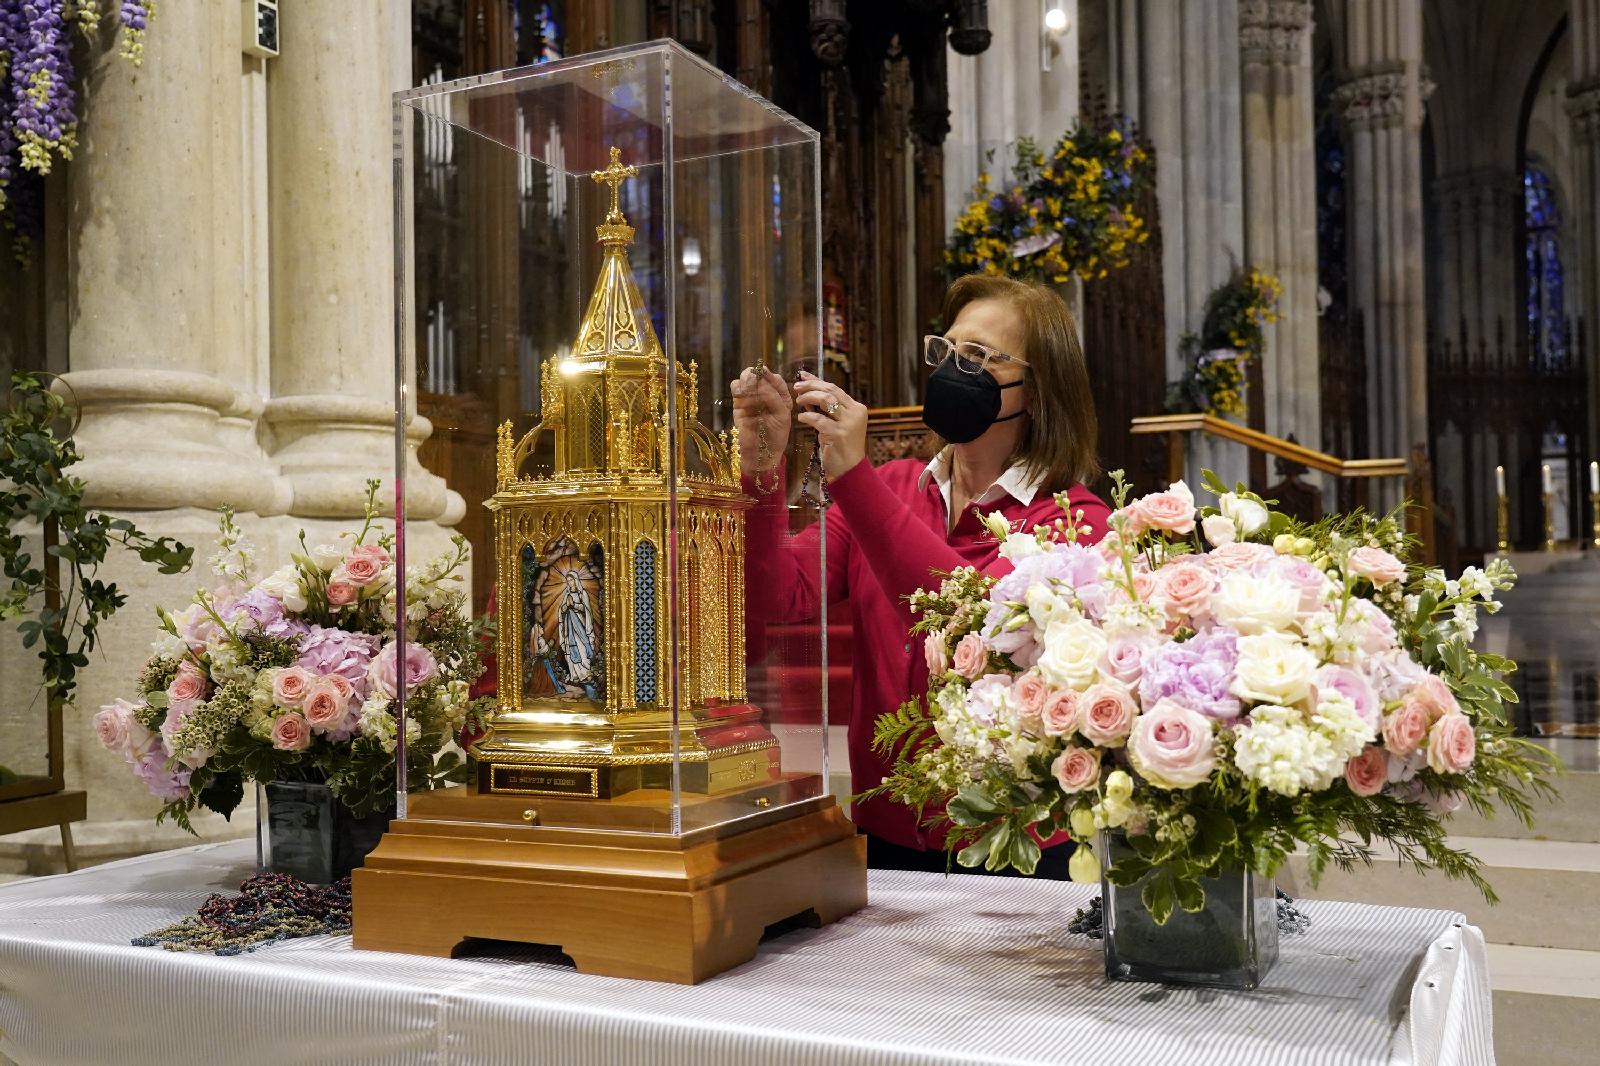 St Bernadette's relics to cross Britain